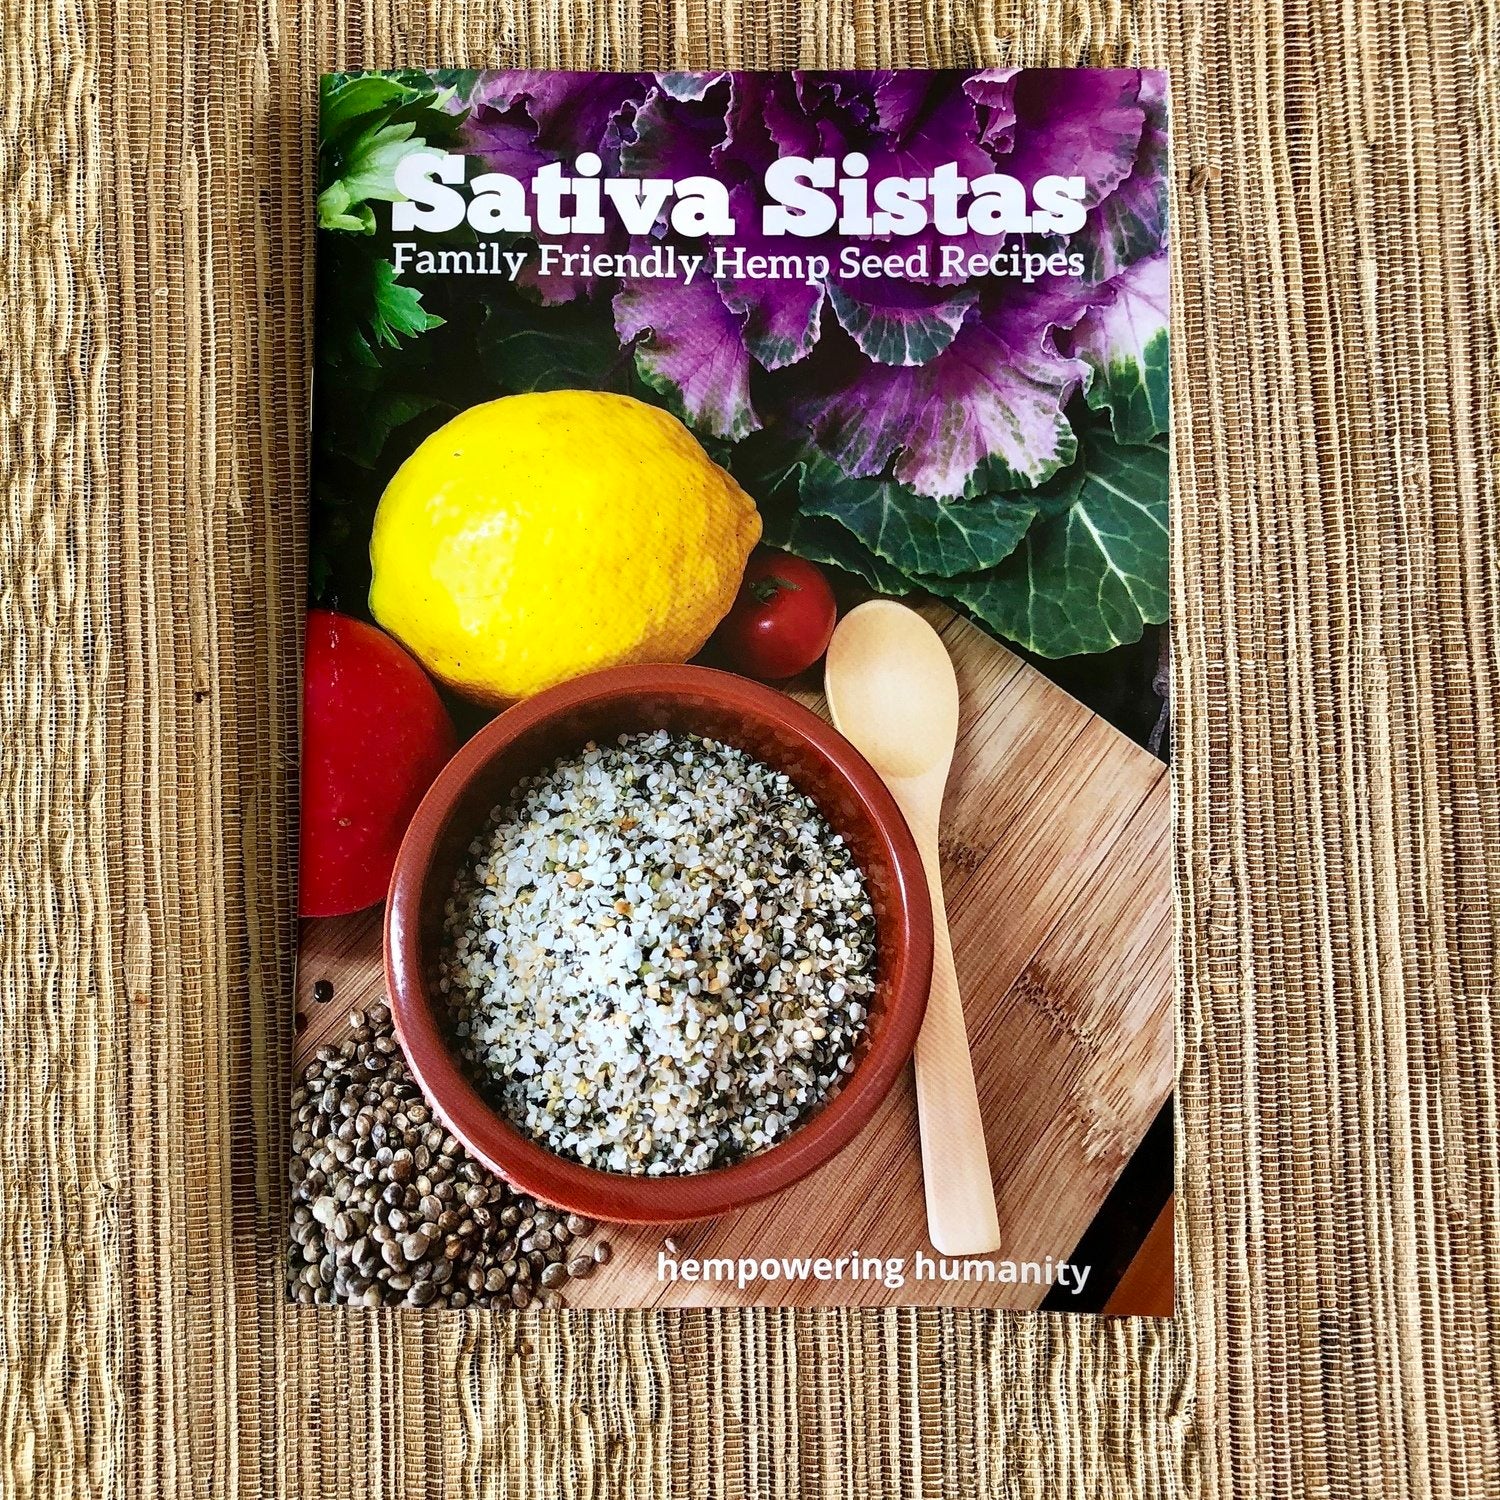 Family Friendly Hemp Seed Recipes by Sativa Sistas